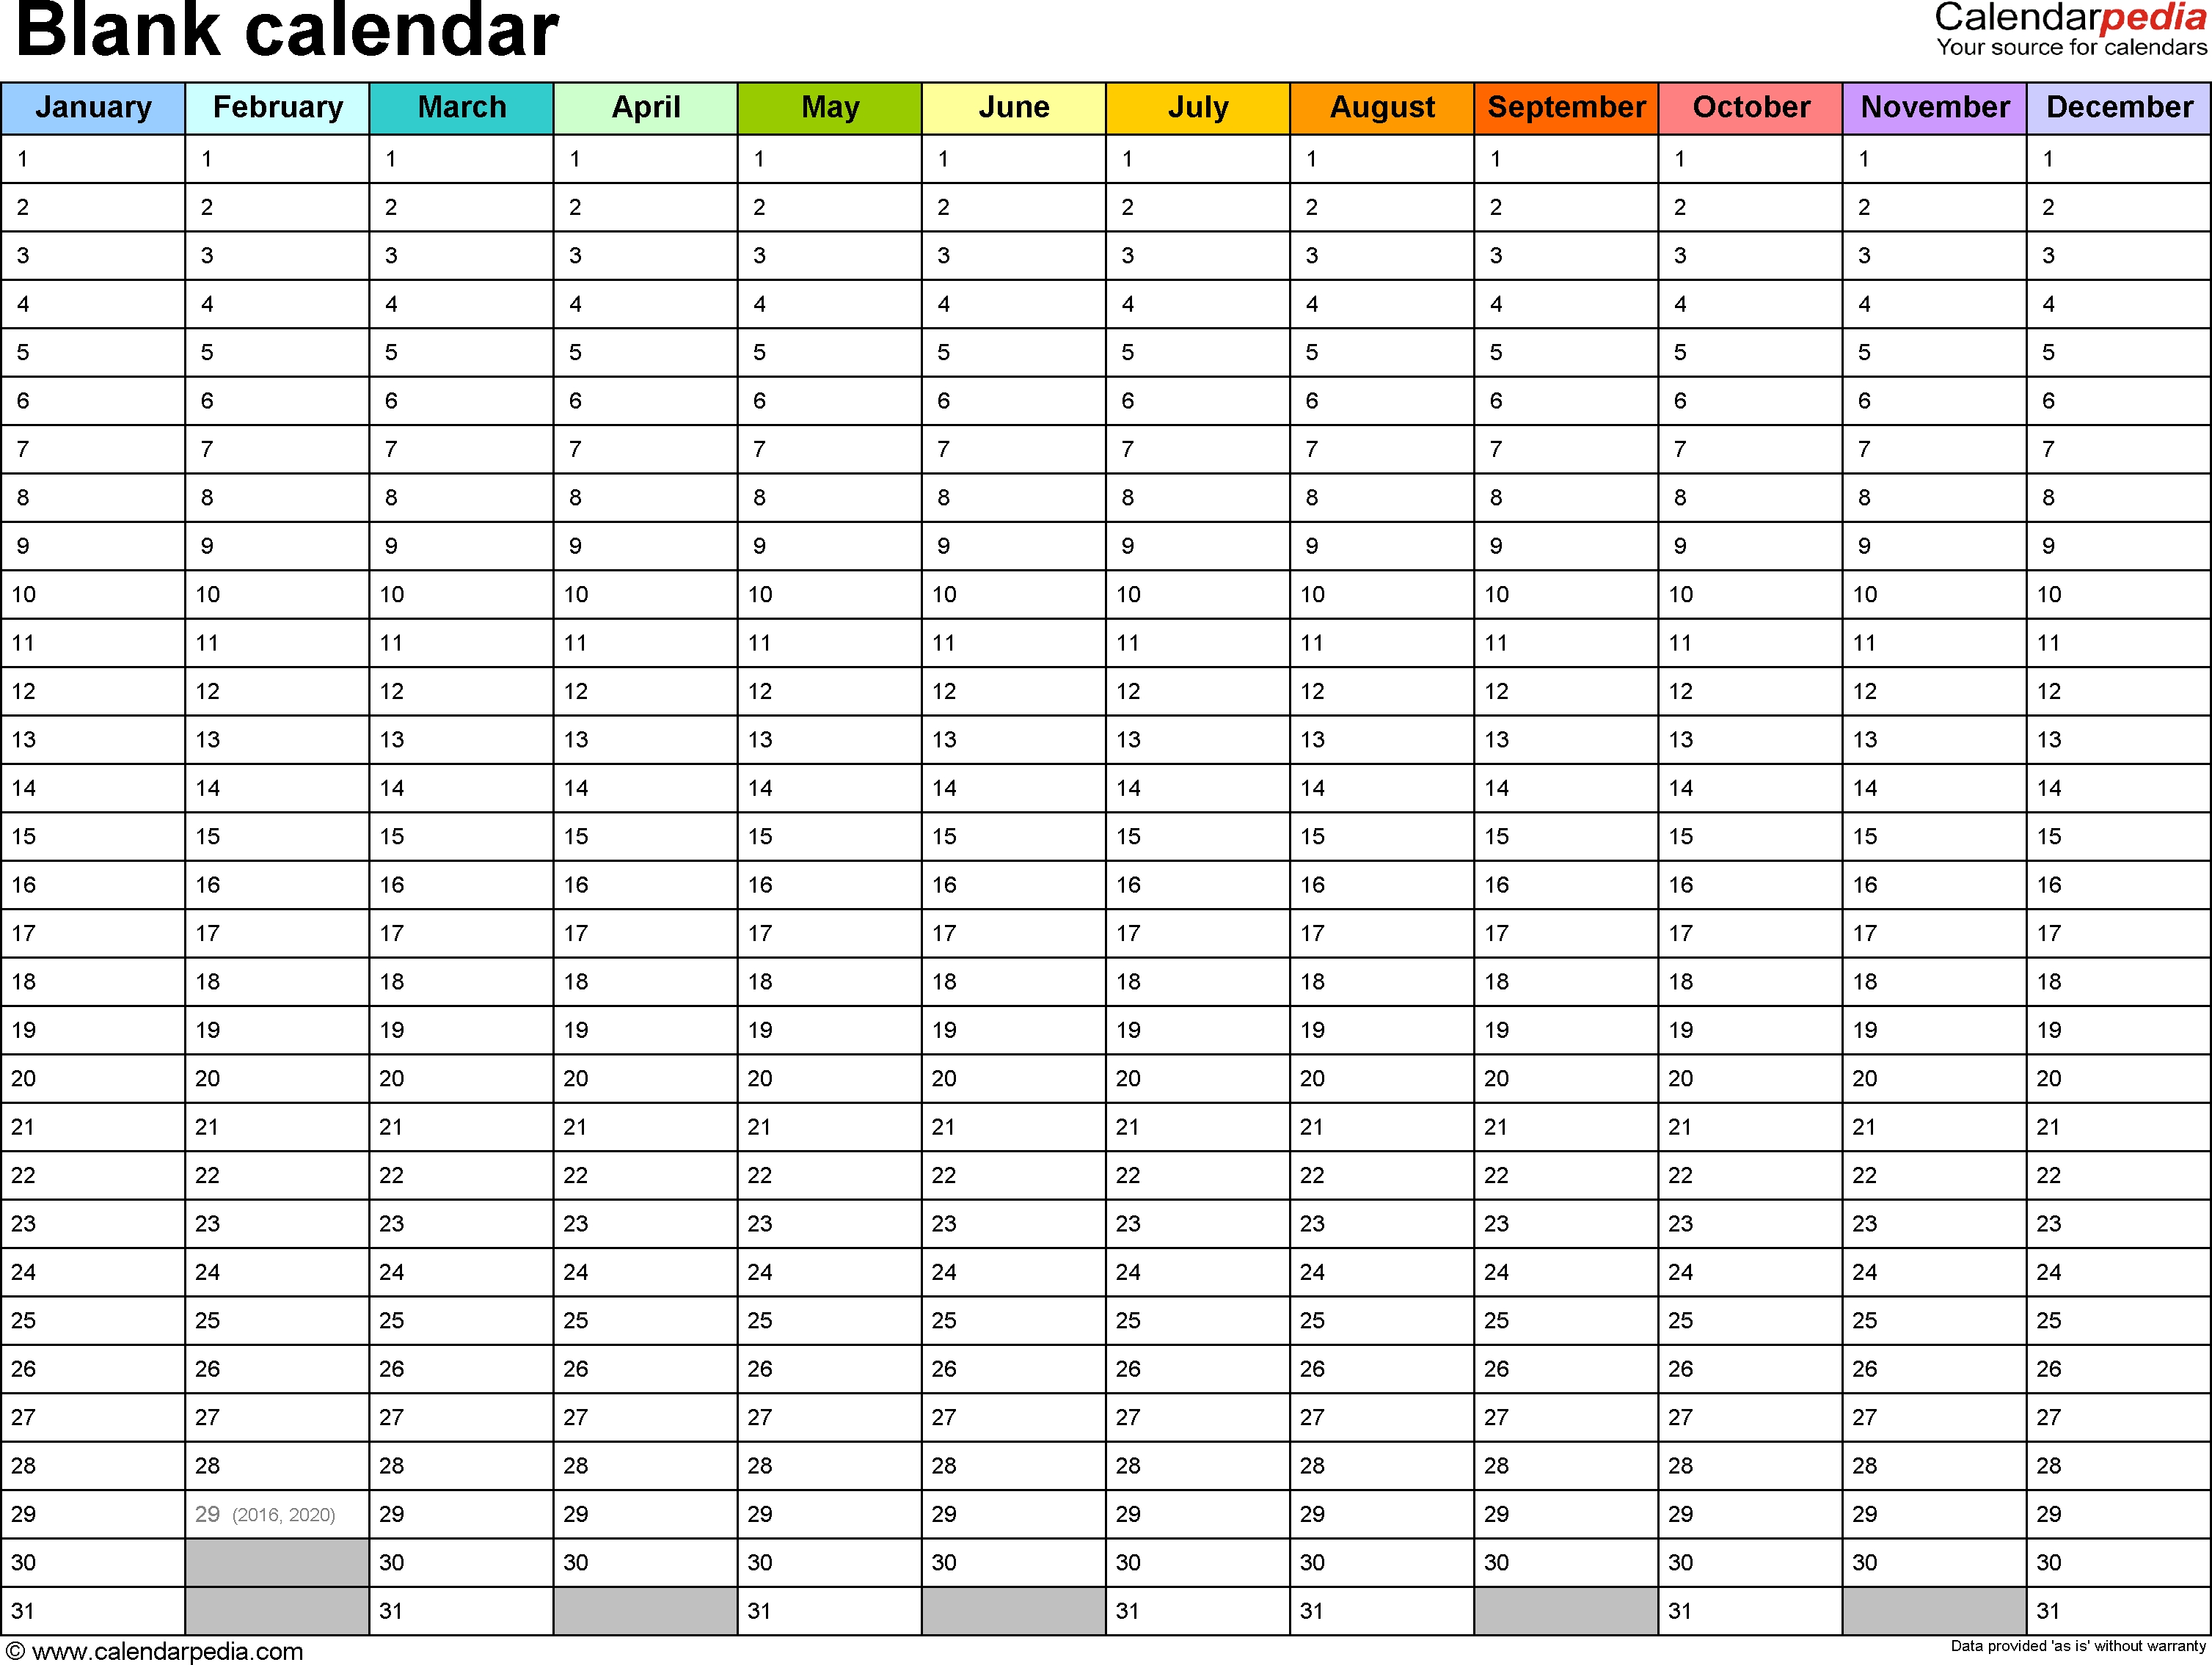 Blank Calendar - 9 Free Printable Microsoft Word Templates Print 3 Calendar Months One Page